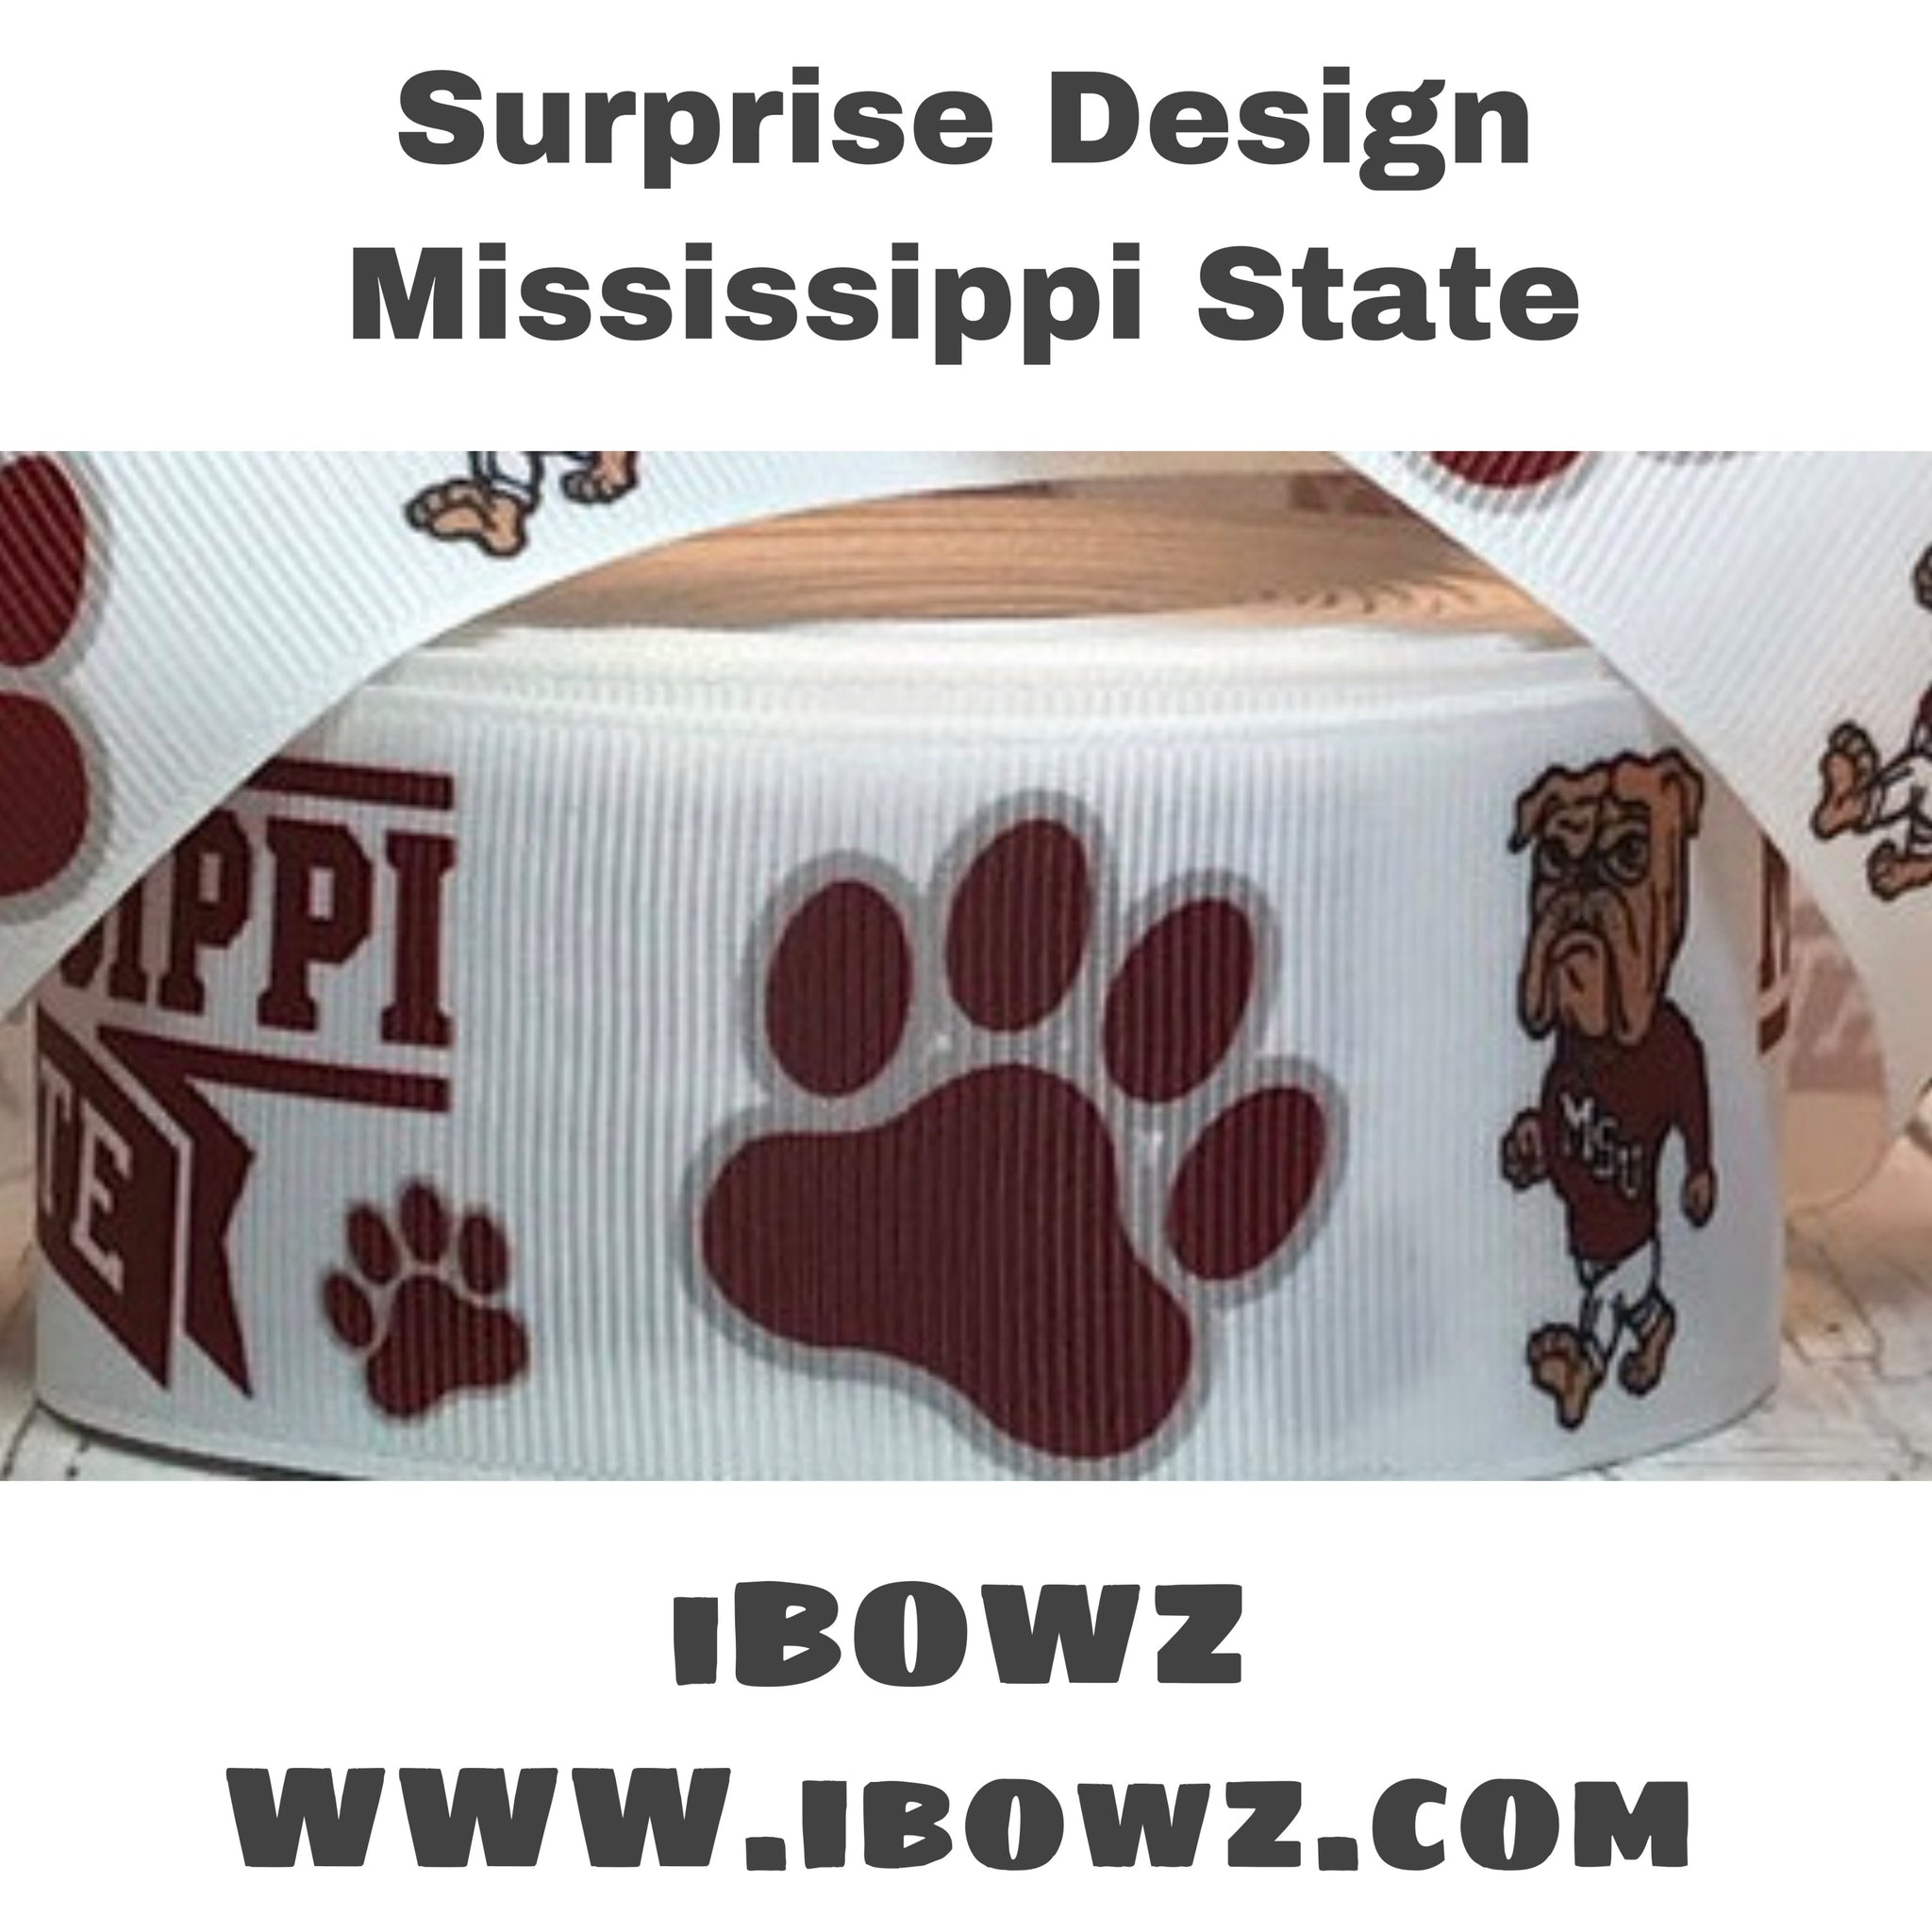 Surprise Design ~ Mississippi State Fun iBOWZ